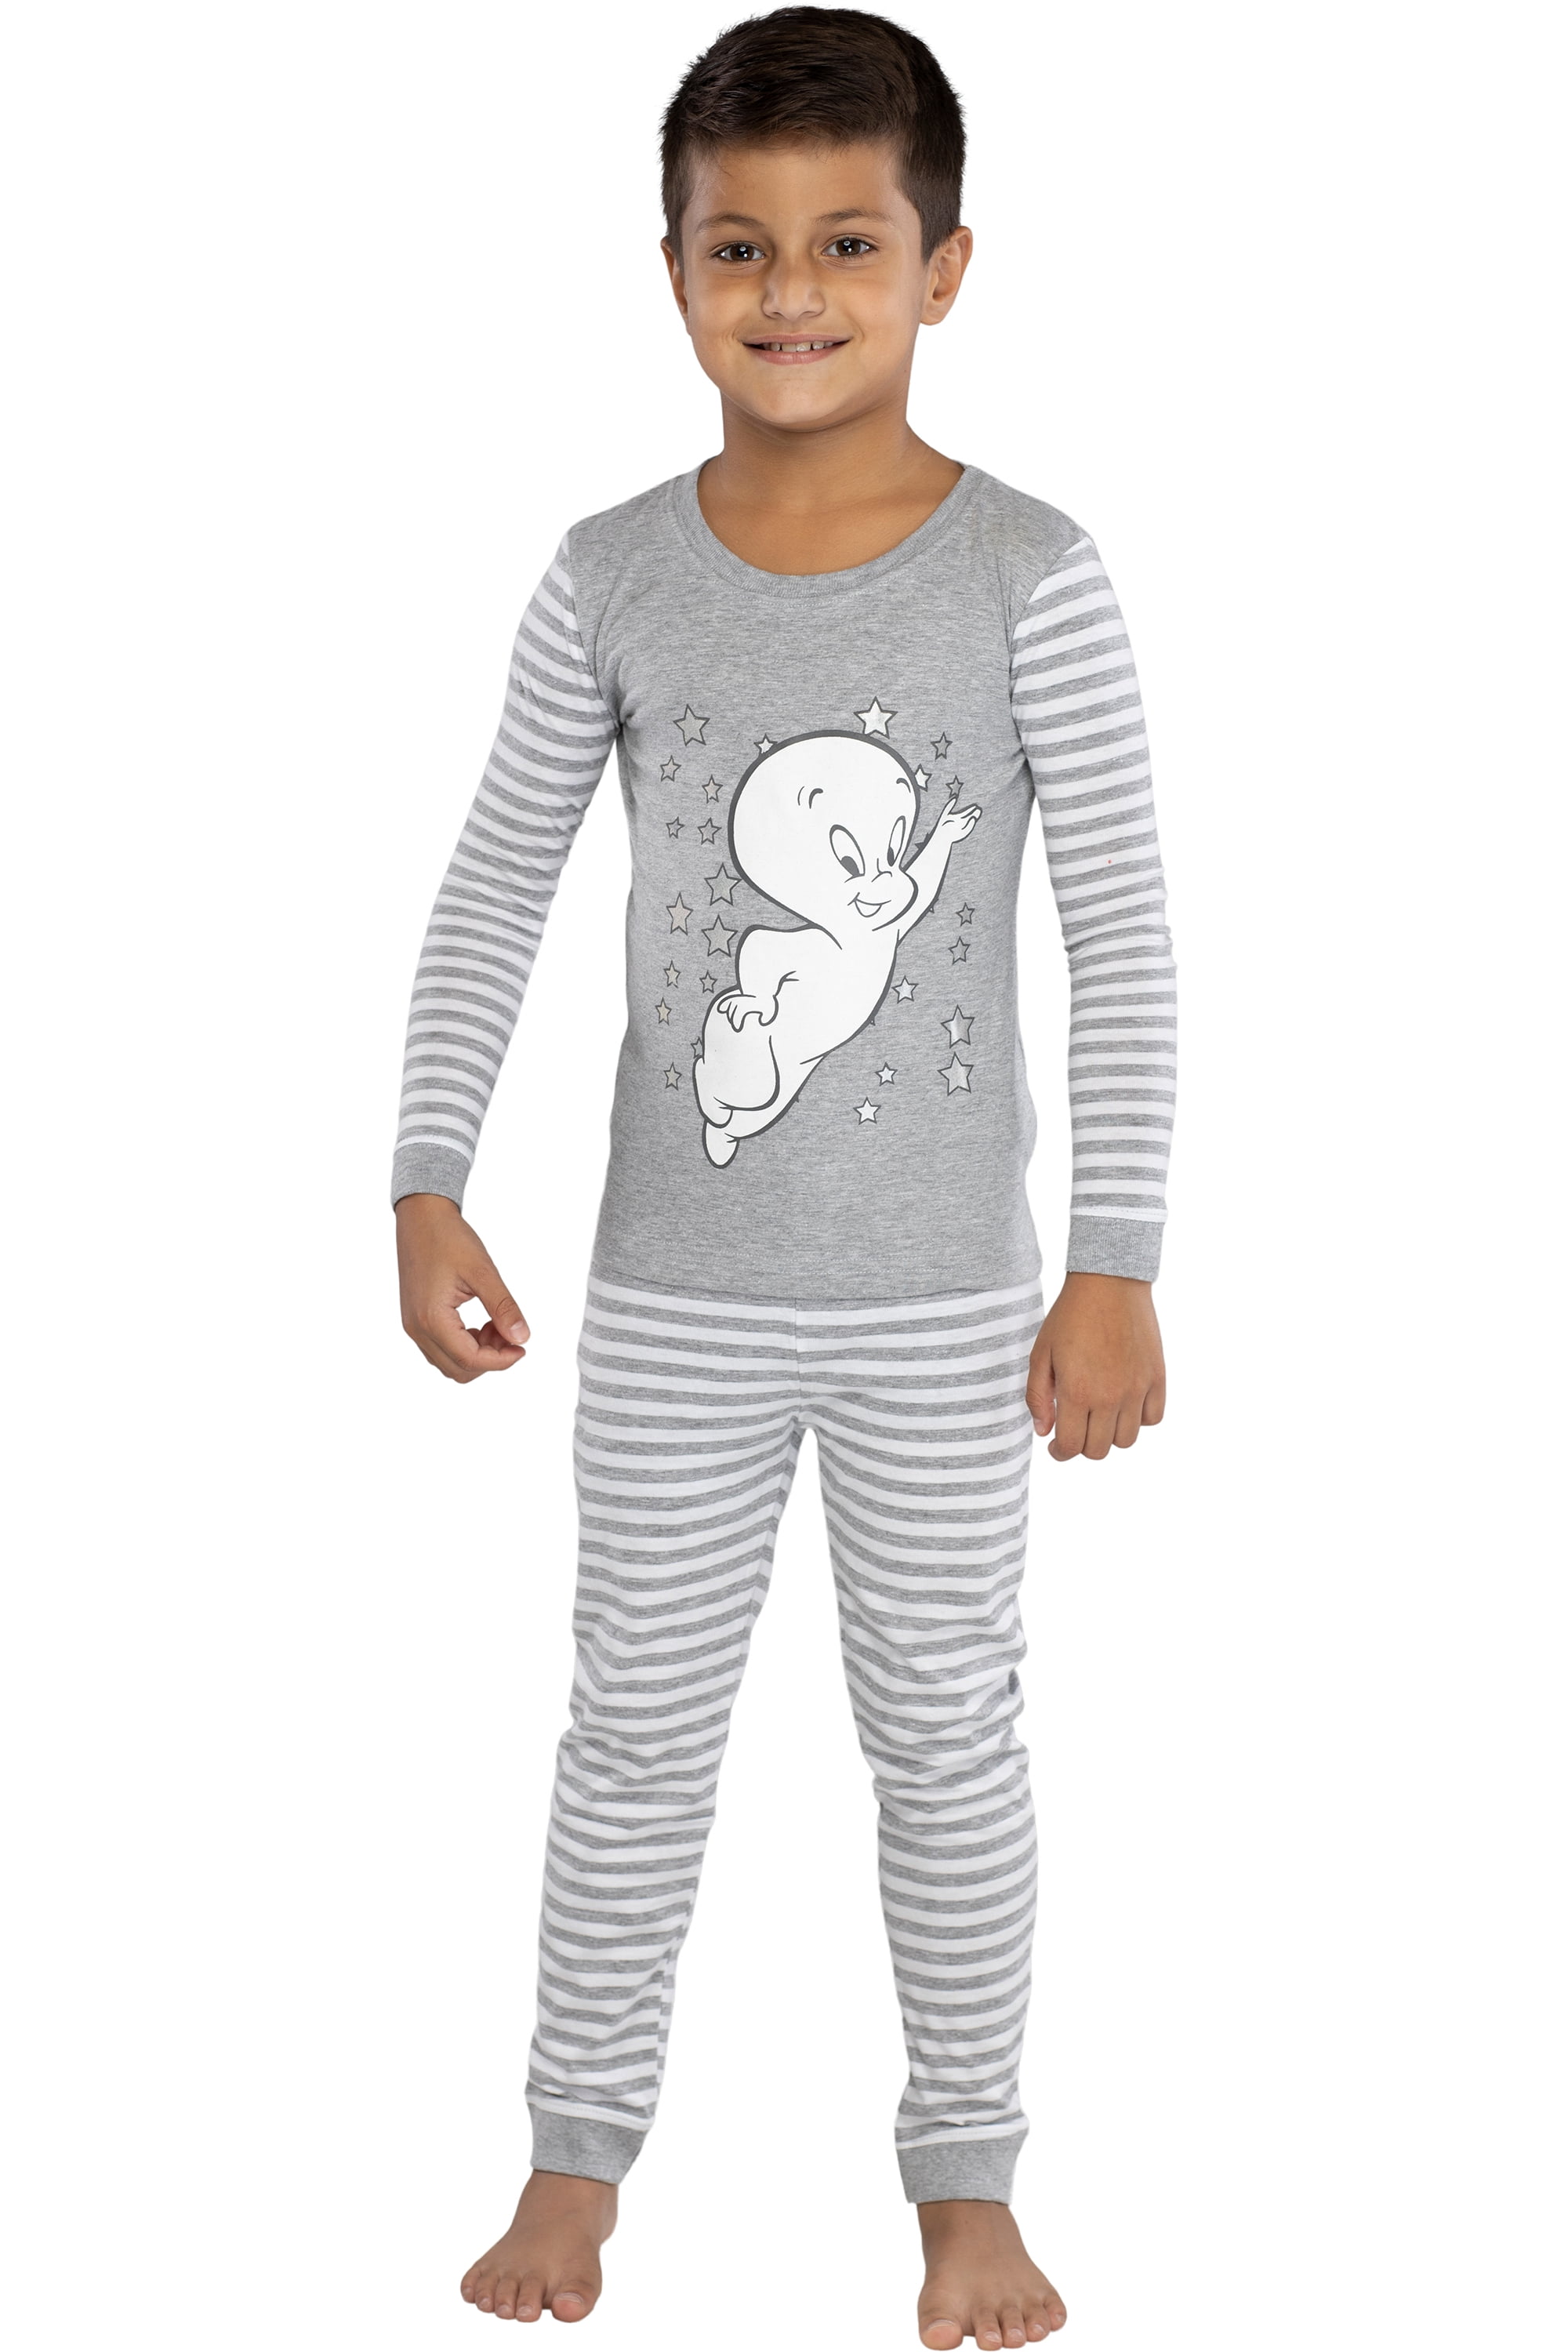 Moderniseren Wanneer Detecteren INTIMO Boys Casper The Friendly Ghost Costume Pajama Set - Walmart.com